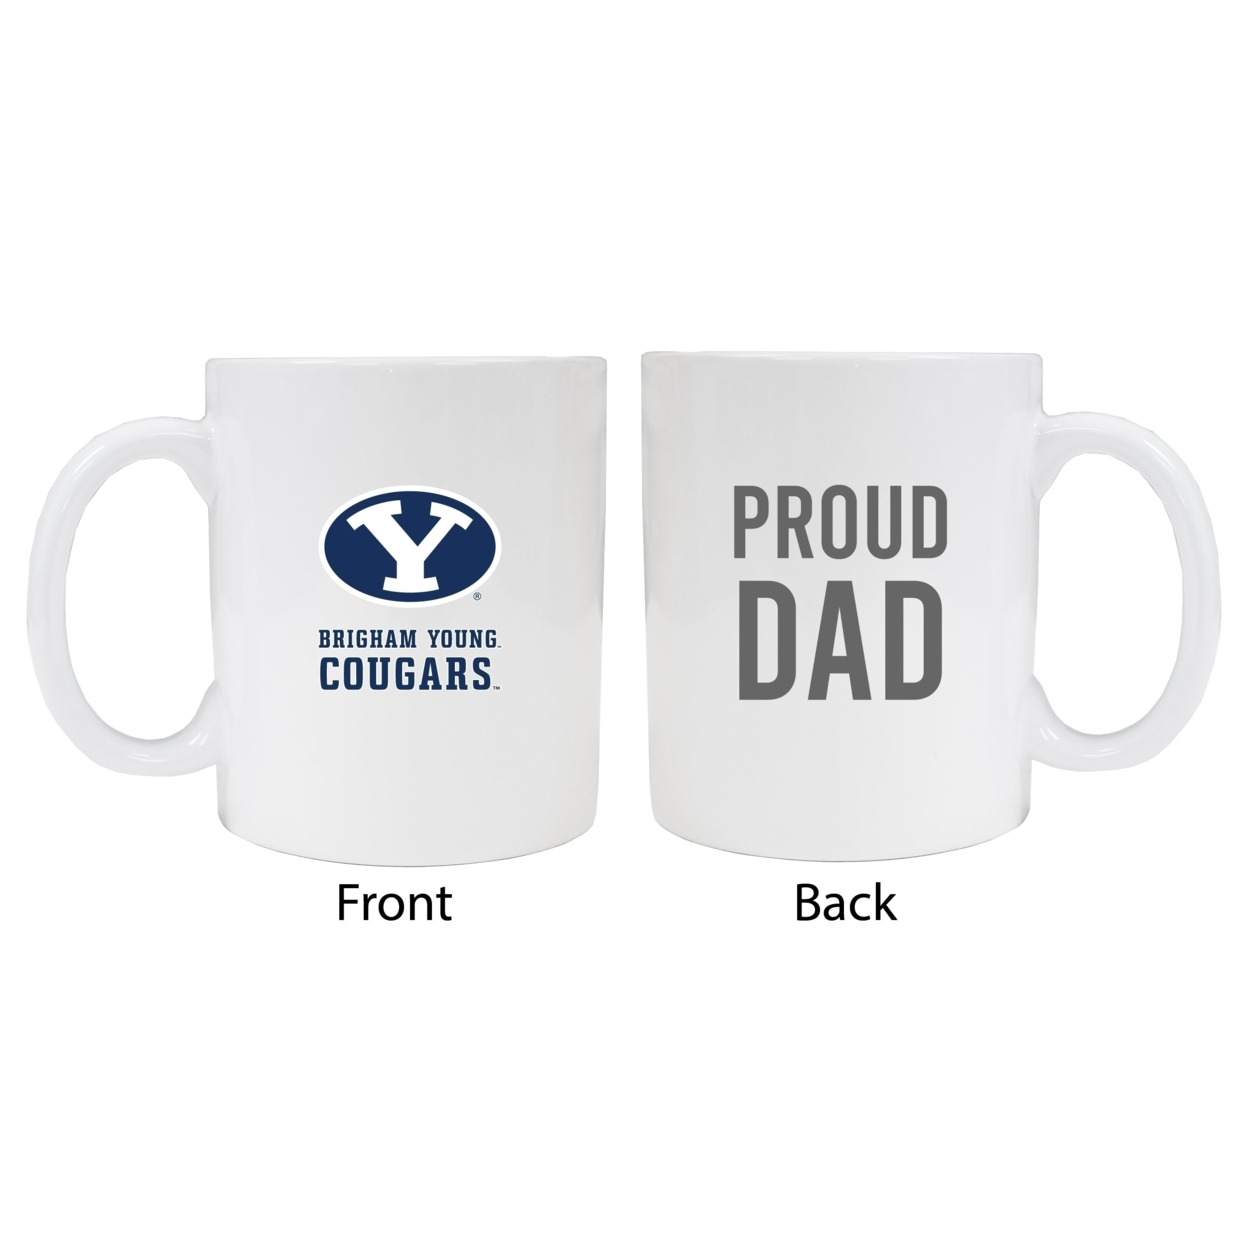 Brigham Young Cougars Proud Dad Ceramic Coffee Mug - White